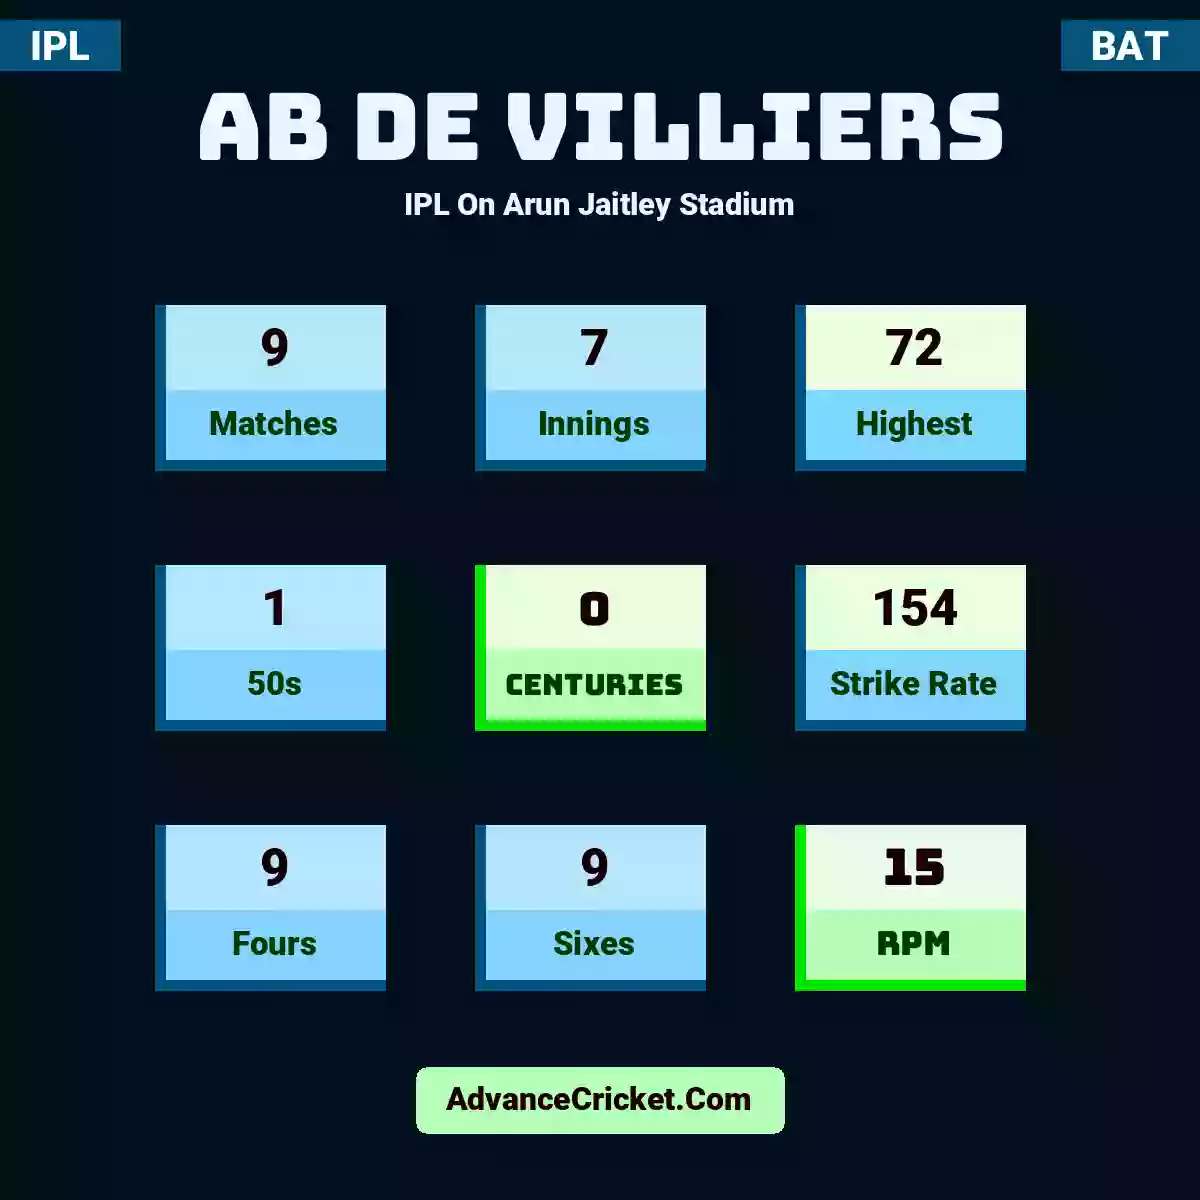 AB de Villiers IPL  On Arun Jaitley Stadium, AB de Villiers played 9 matches, scored 72 runs as highest, 1 half-centuries, and 0 centuries, with a strike rate of 154. A.Villiers hit 9 fours and 9 sixes, with an RPM of 15.